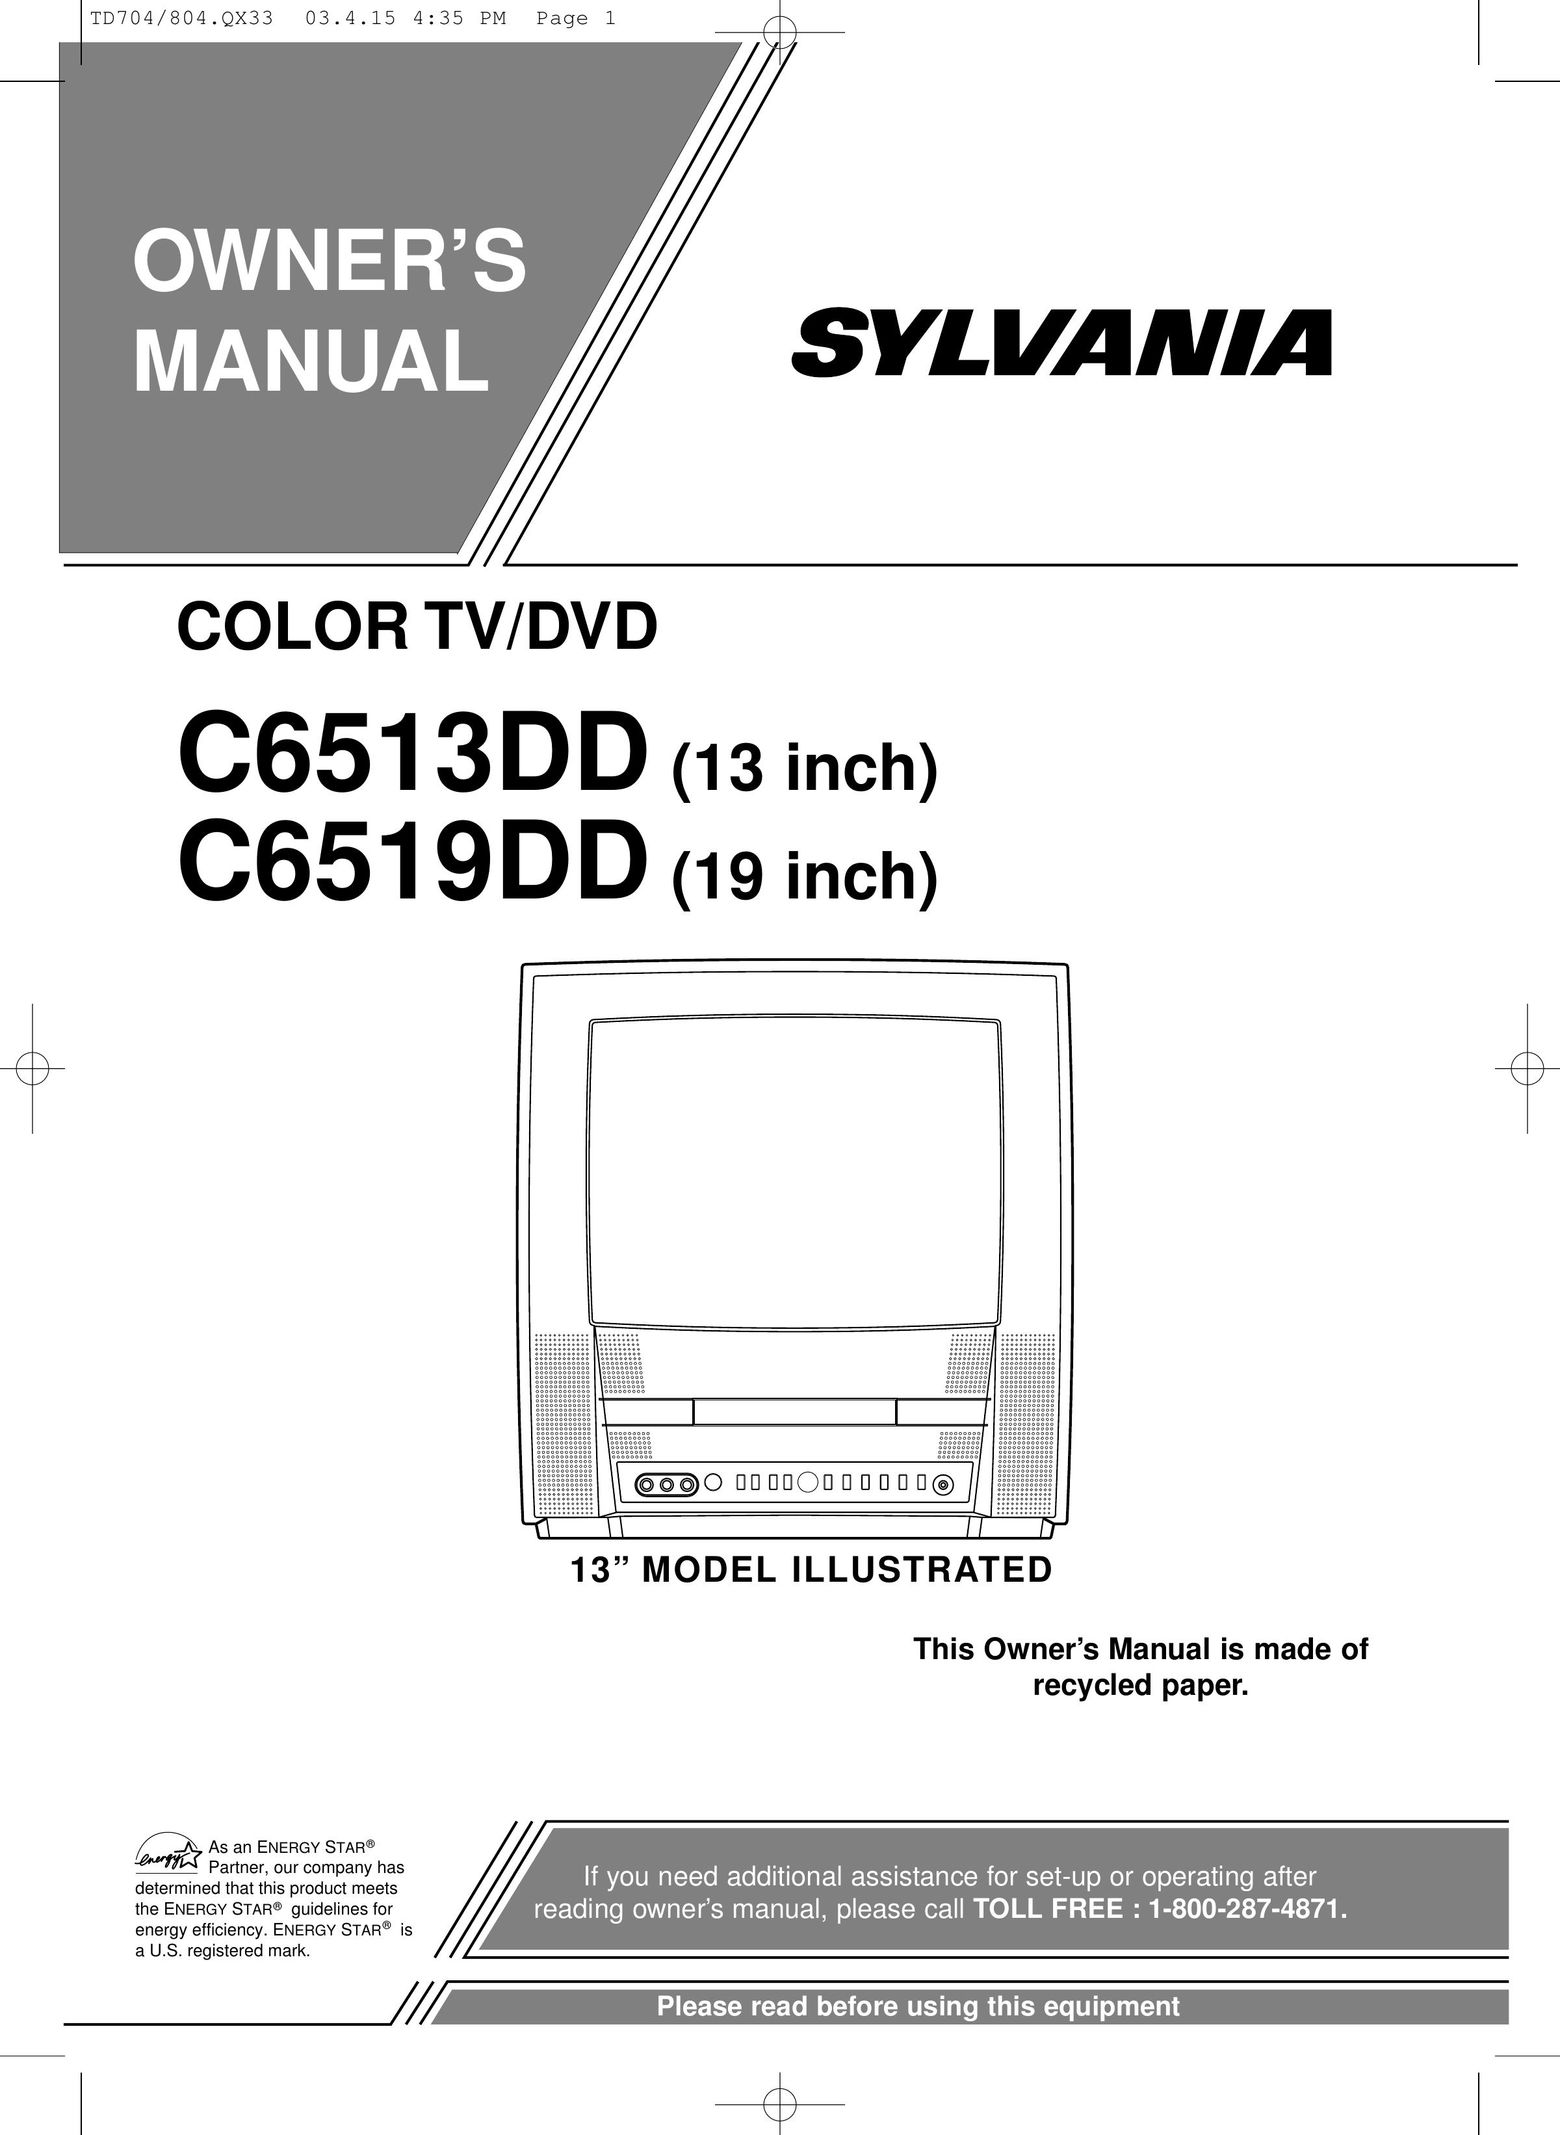 Sylvania C6519DD TV DVD Combo User Manual